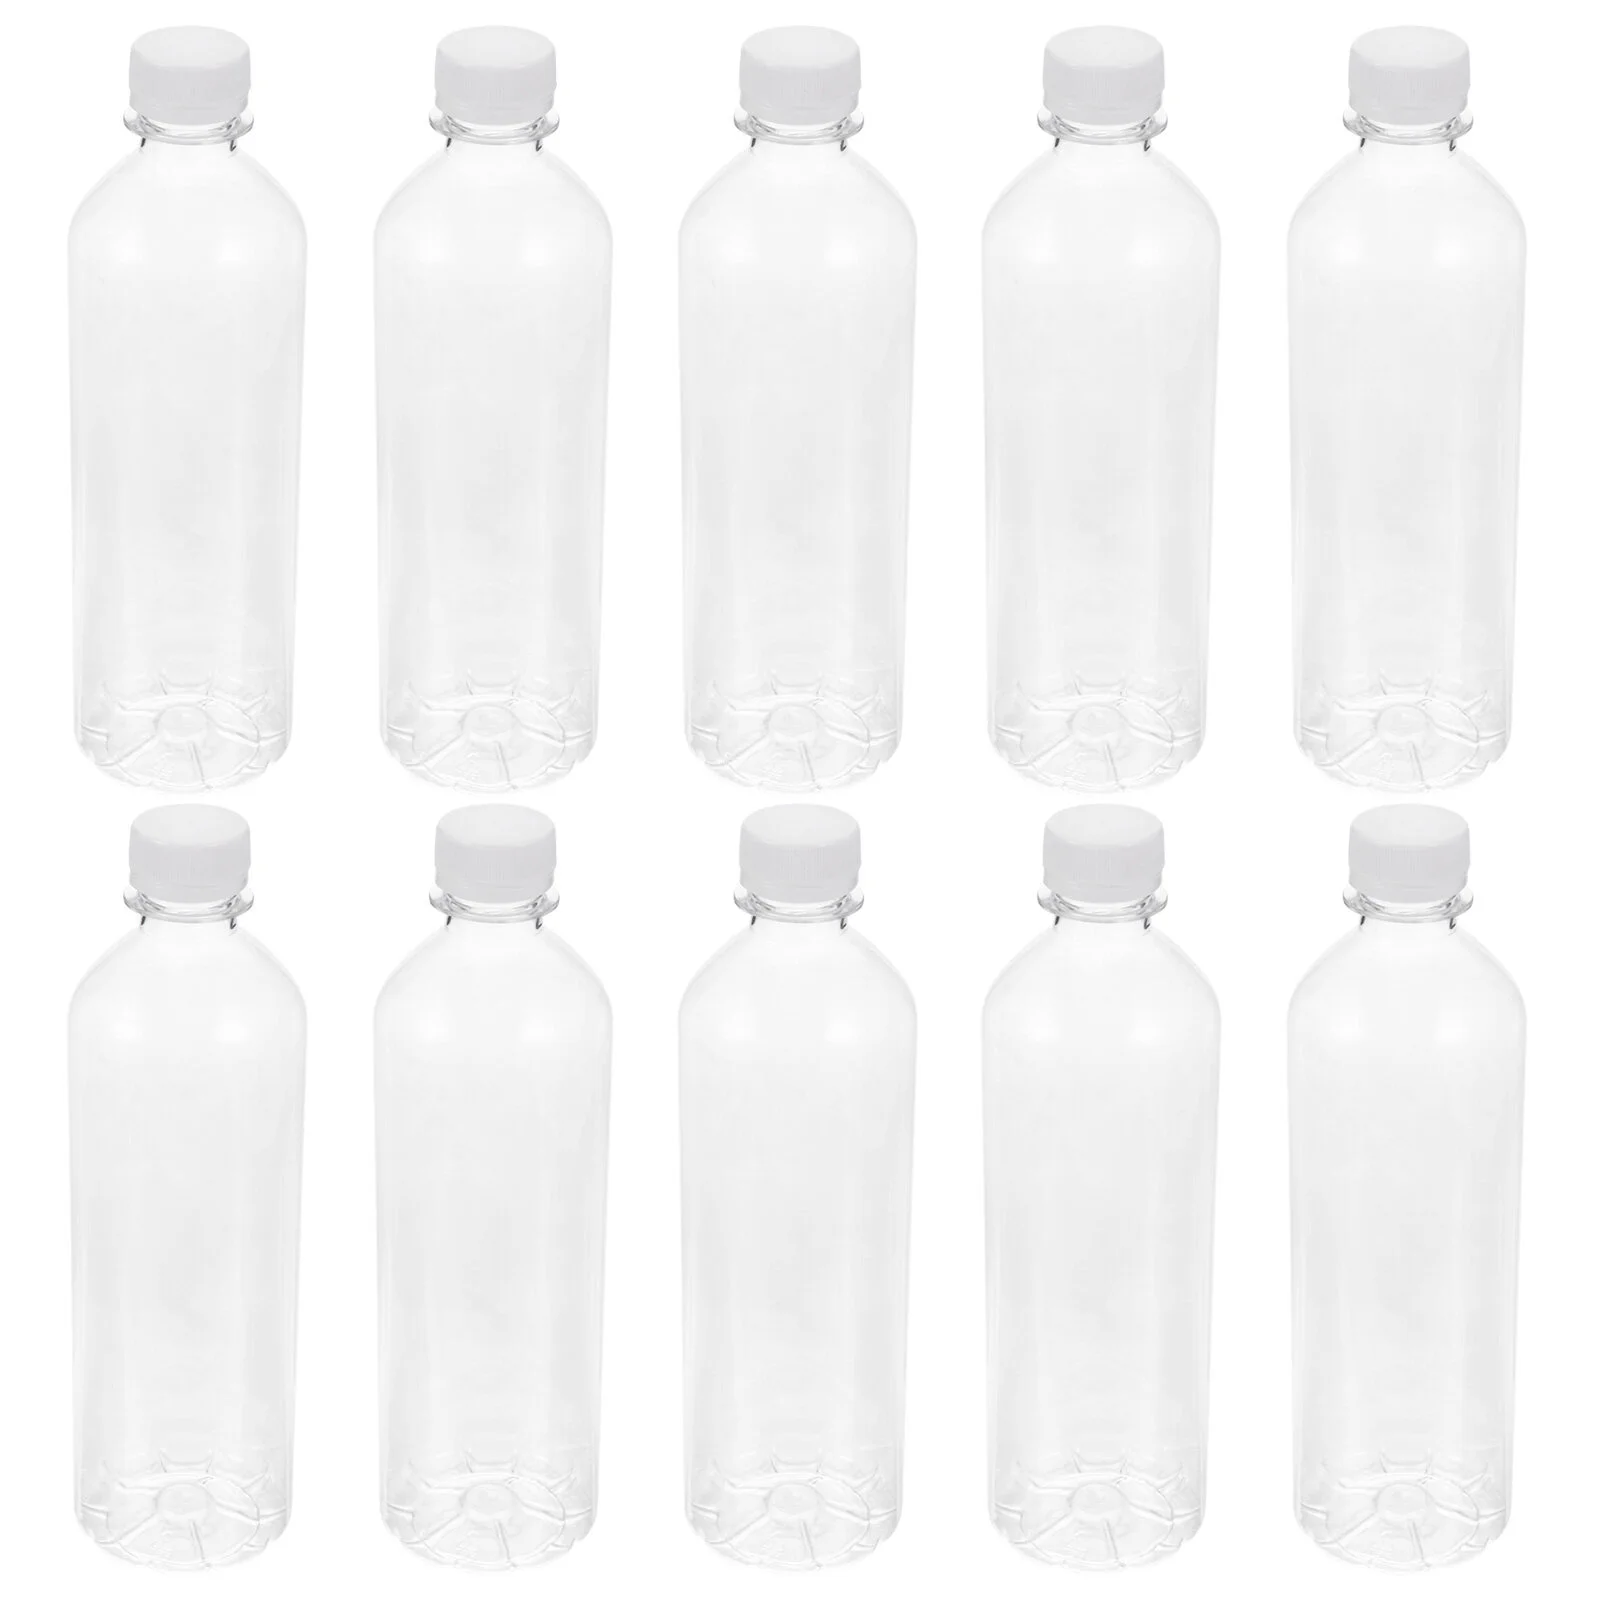 

10 Pcs Pet Food Containers Plastic Drink Bottle Simple Water Bottles Juice 6x6x21cm Beverage Storage Empty Refillable Travel